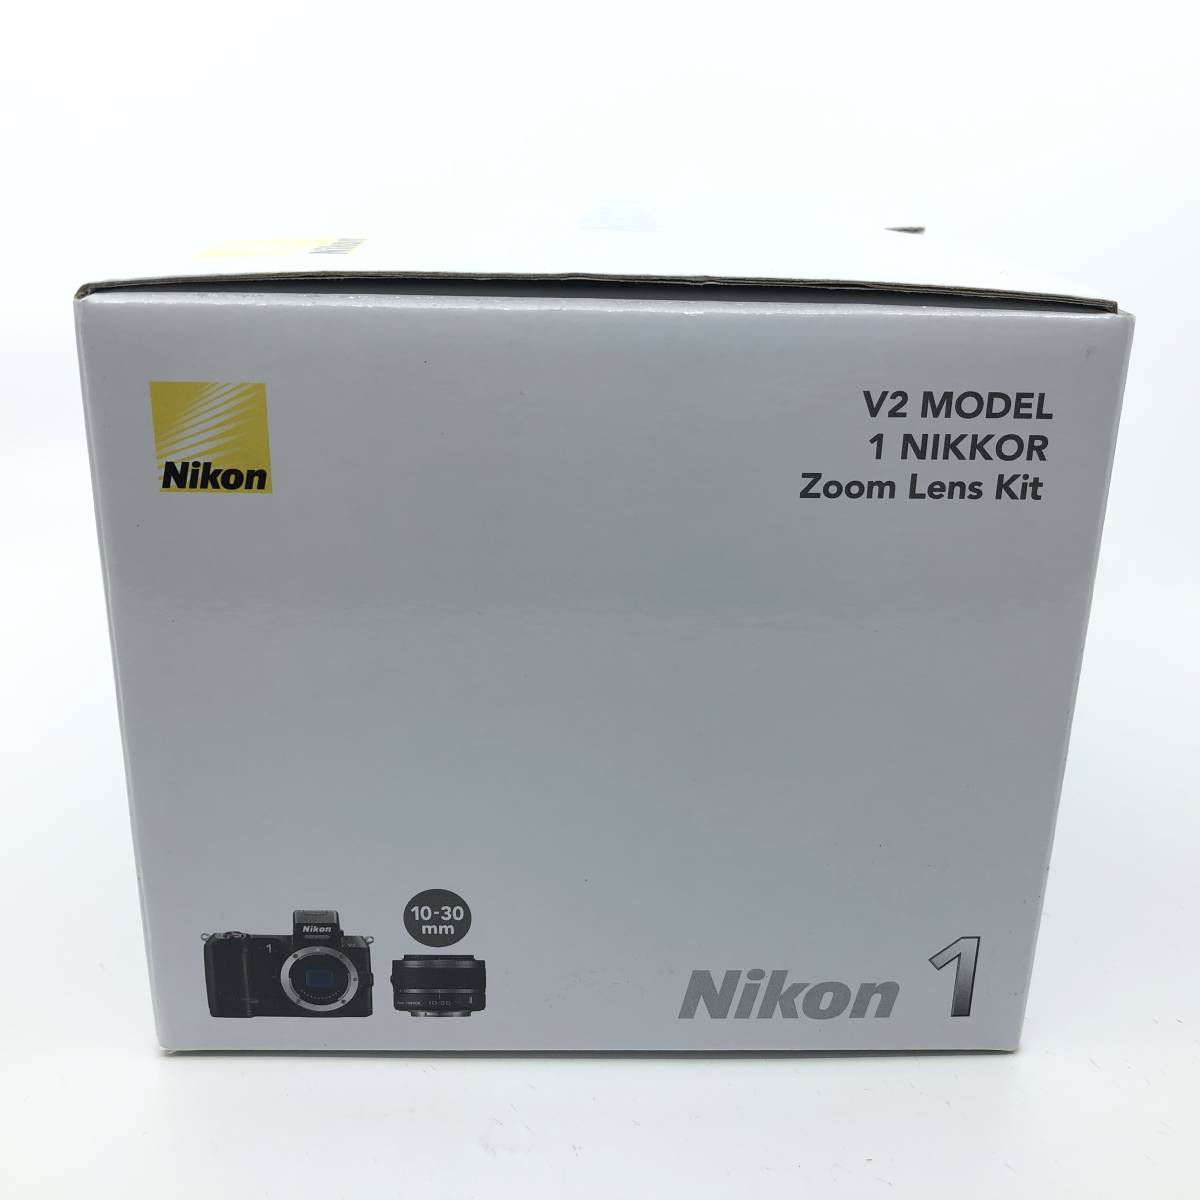 [ оригинальная коробка только ] Nikon Nikon 1 V2 MODEL 1 NIKKOR Zoom Lens Kit для оригинальная коробка только #B1343